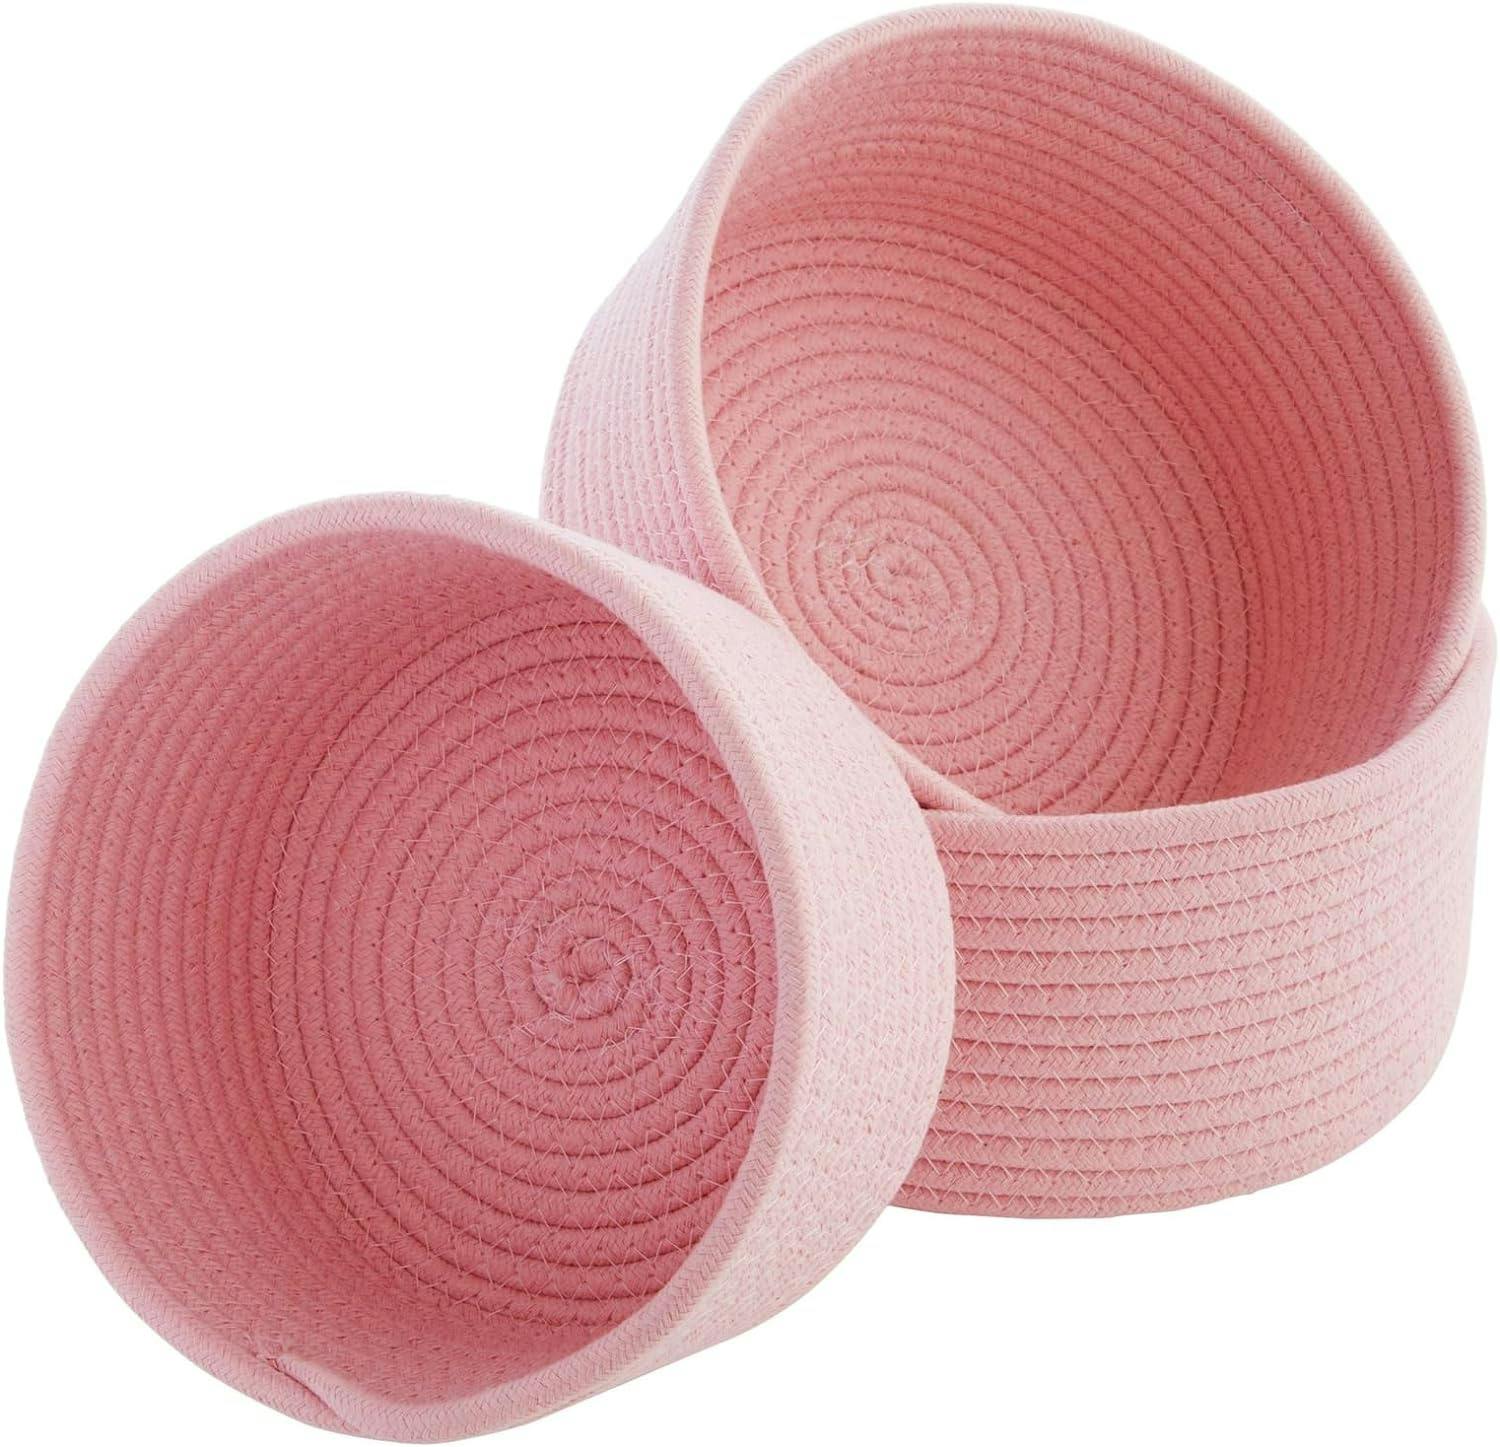 Elegant Pink Cotton Rope Woven Storage Basket Trio